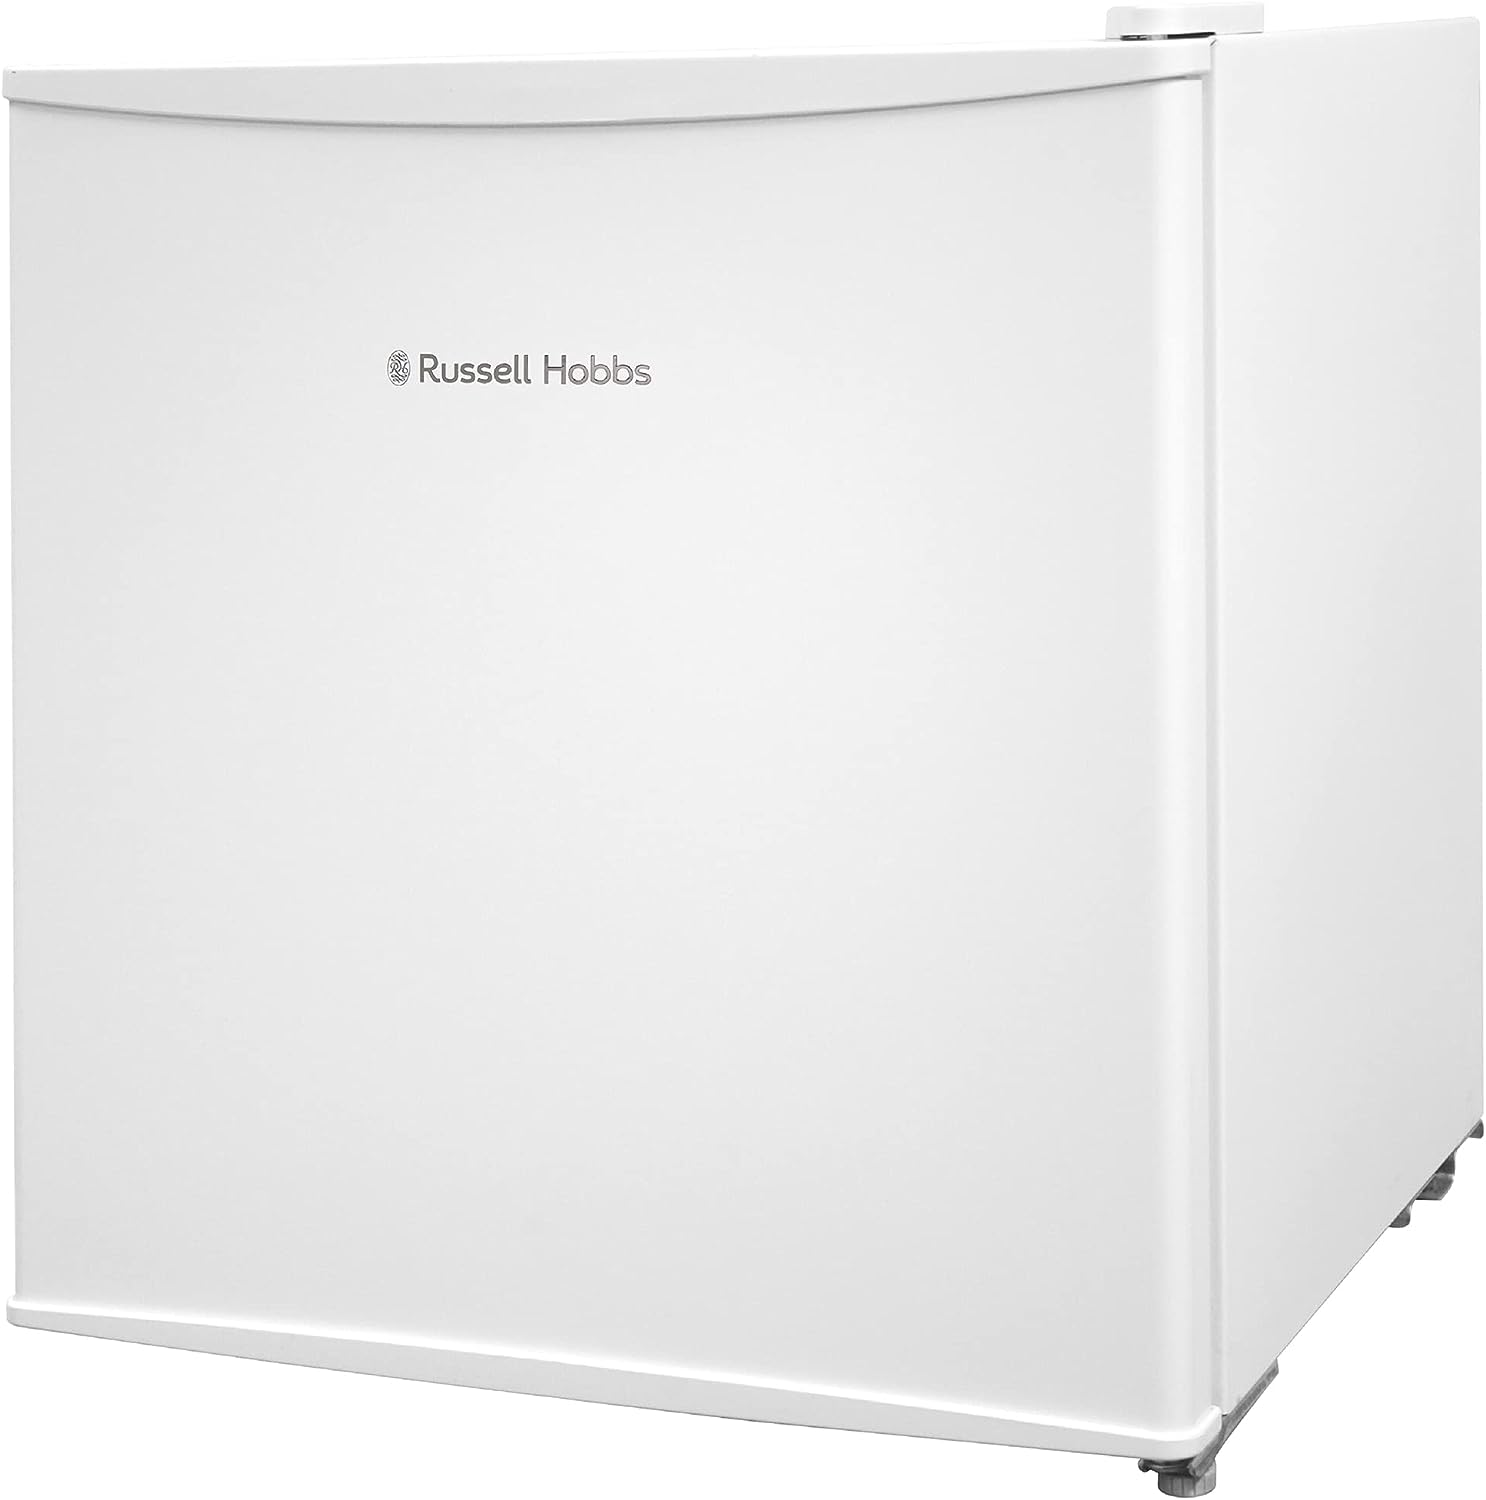 Russell Hobbs Mini Freezer 31 Litre Capacity White Freestanding Table Top Small Freezer with Adjustable Shelf Reversible Door RHTTFZ1, 1 Year Guarantee [Energy Class F]